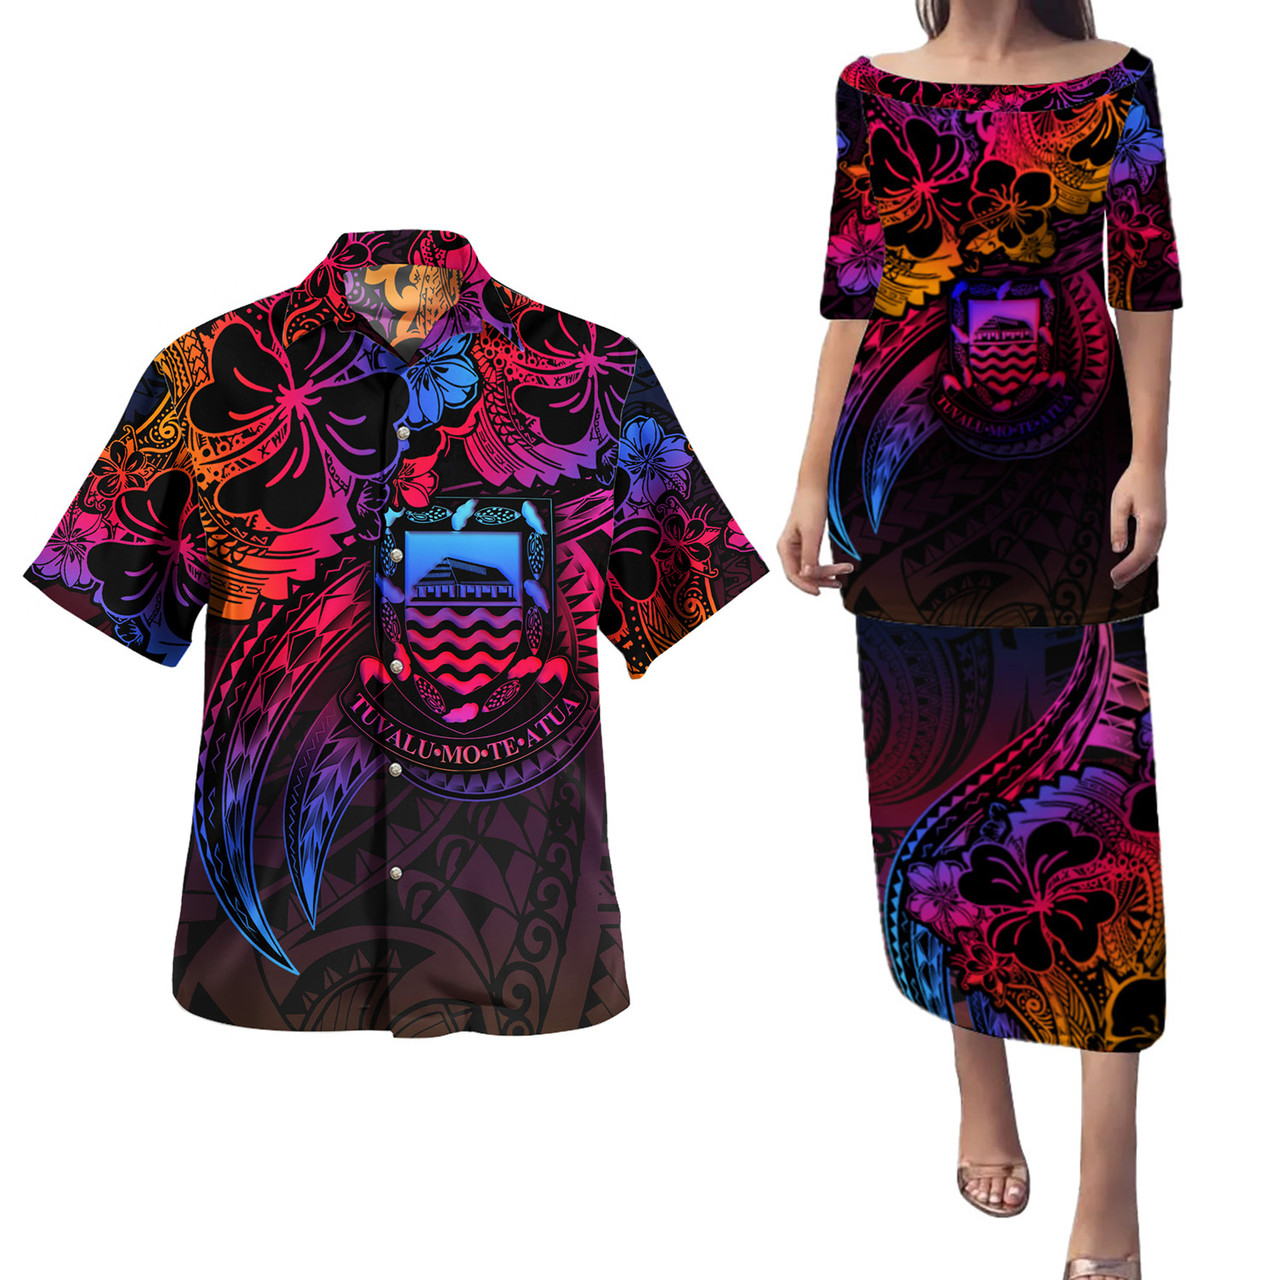 Tuvalu Combo Puletasi And Shirt Rainbow Style